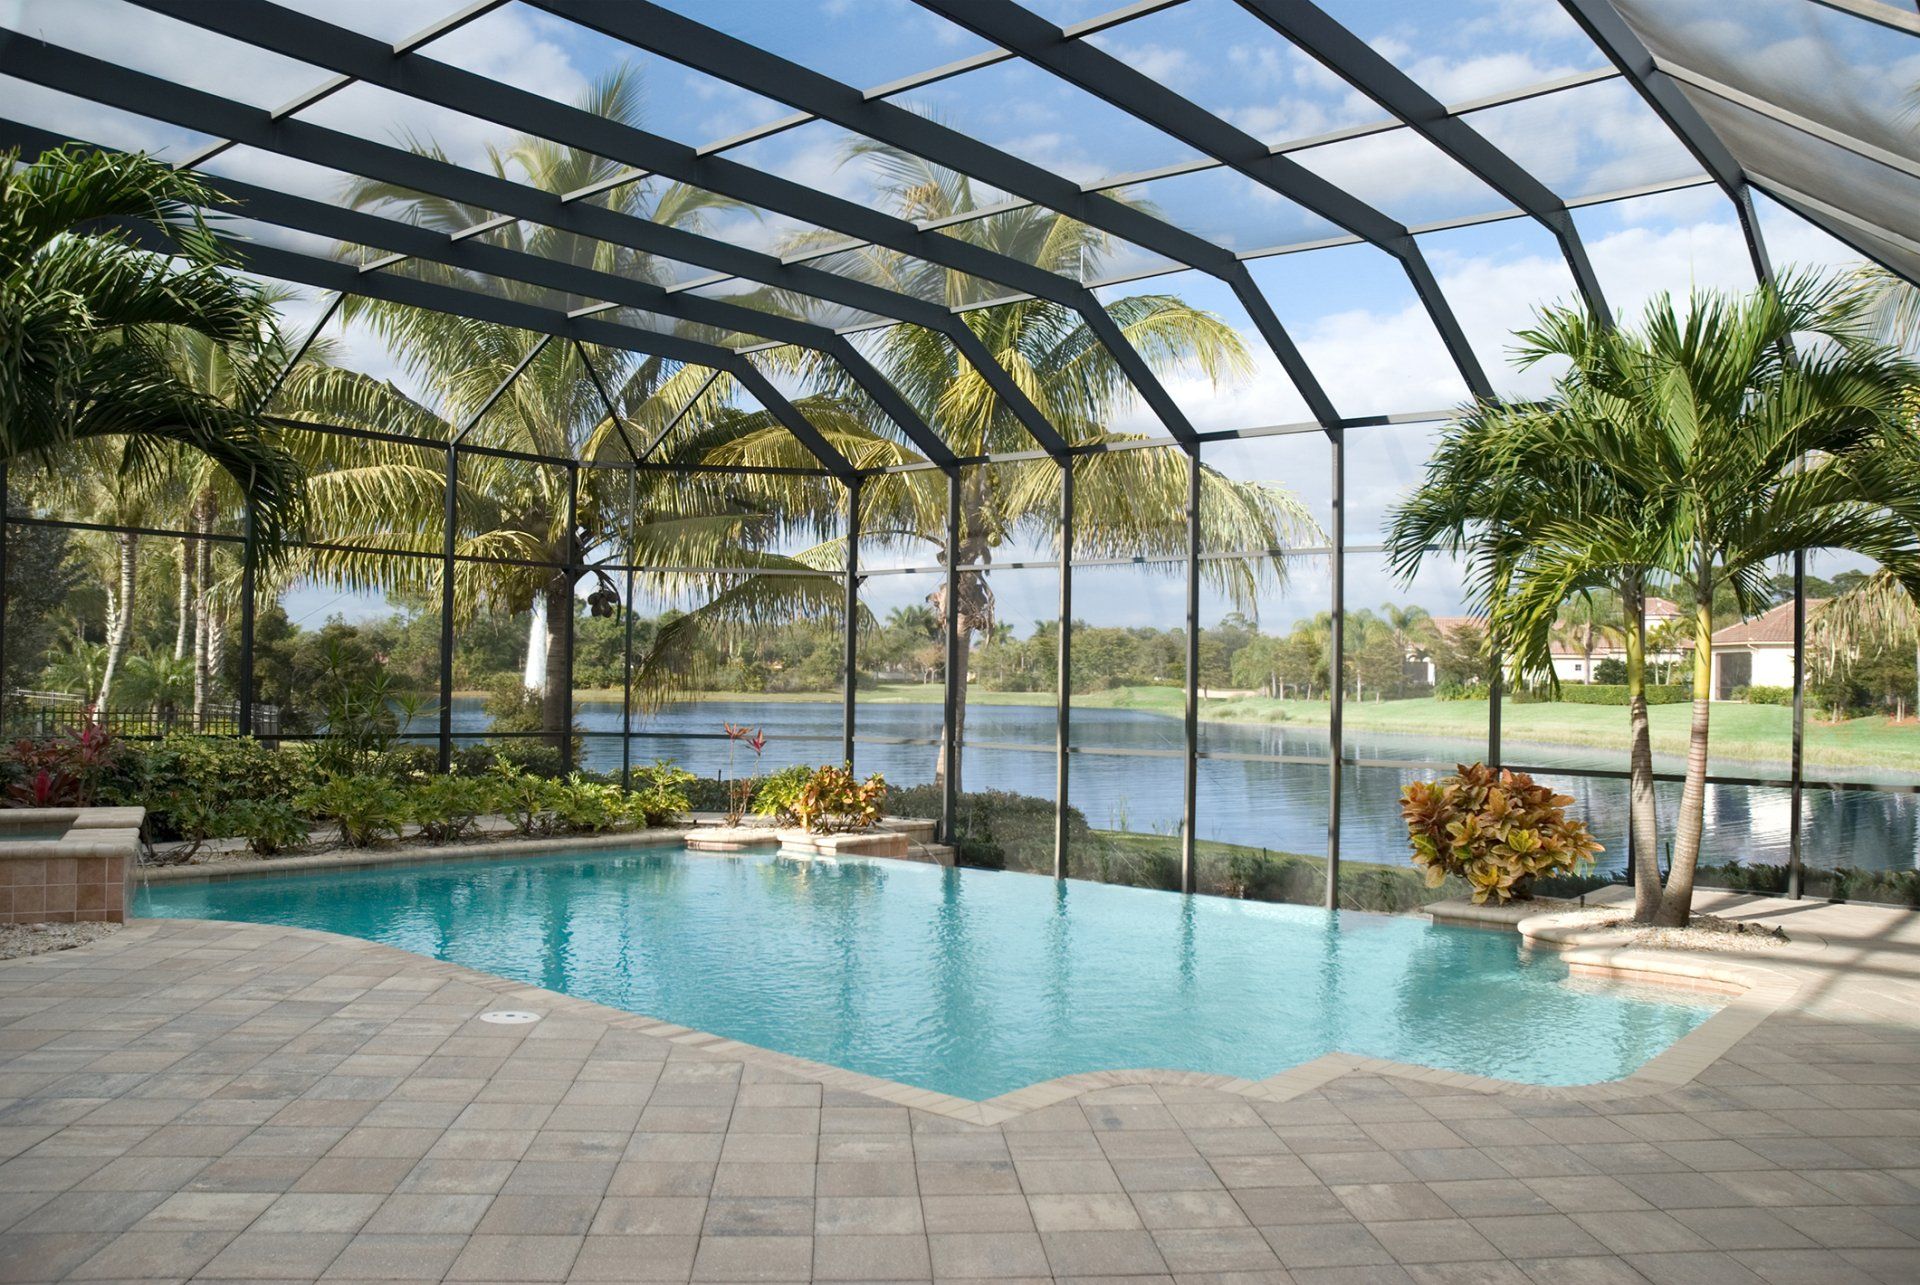 Backyard Pool Covered by Screen Lanai - Bradenton, FL - Screens Now